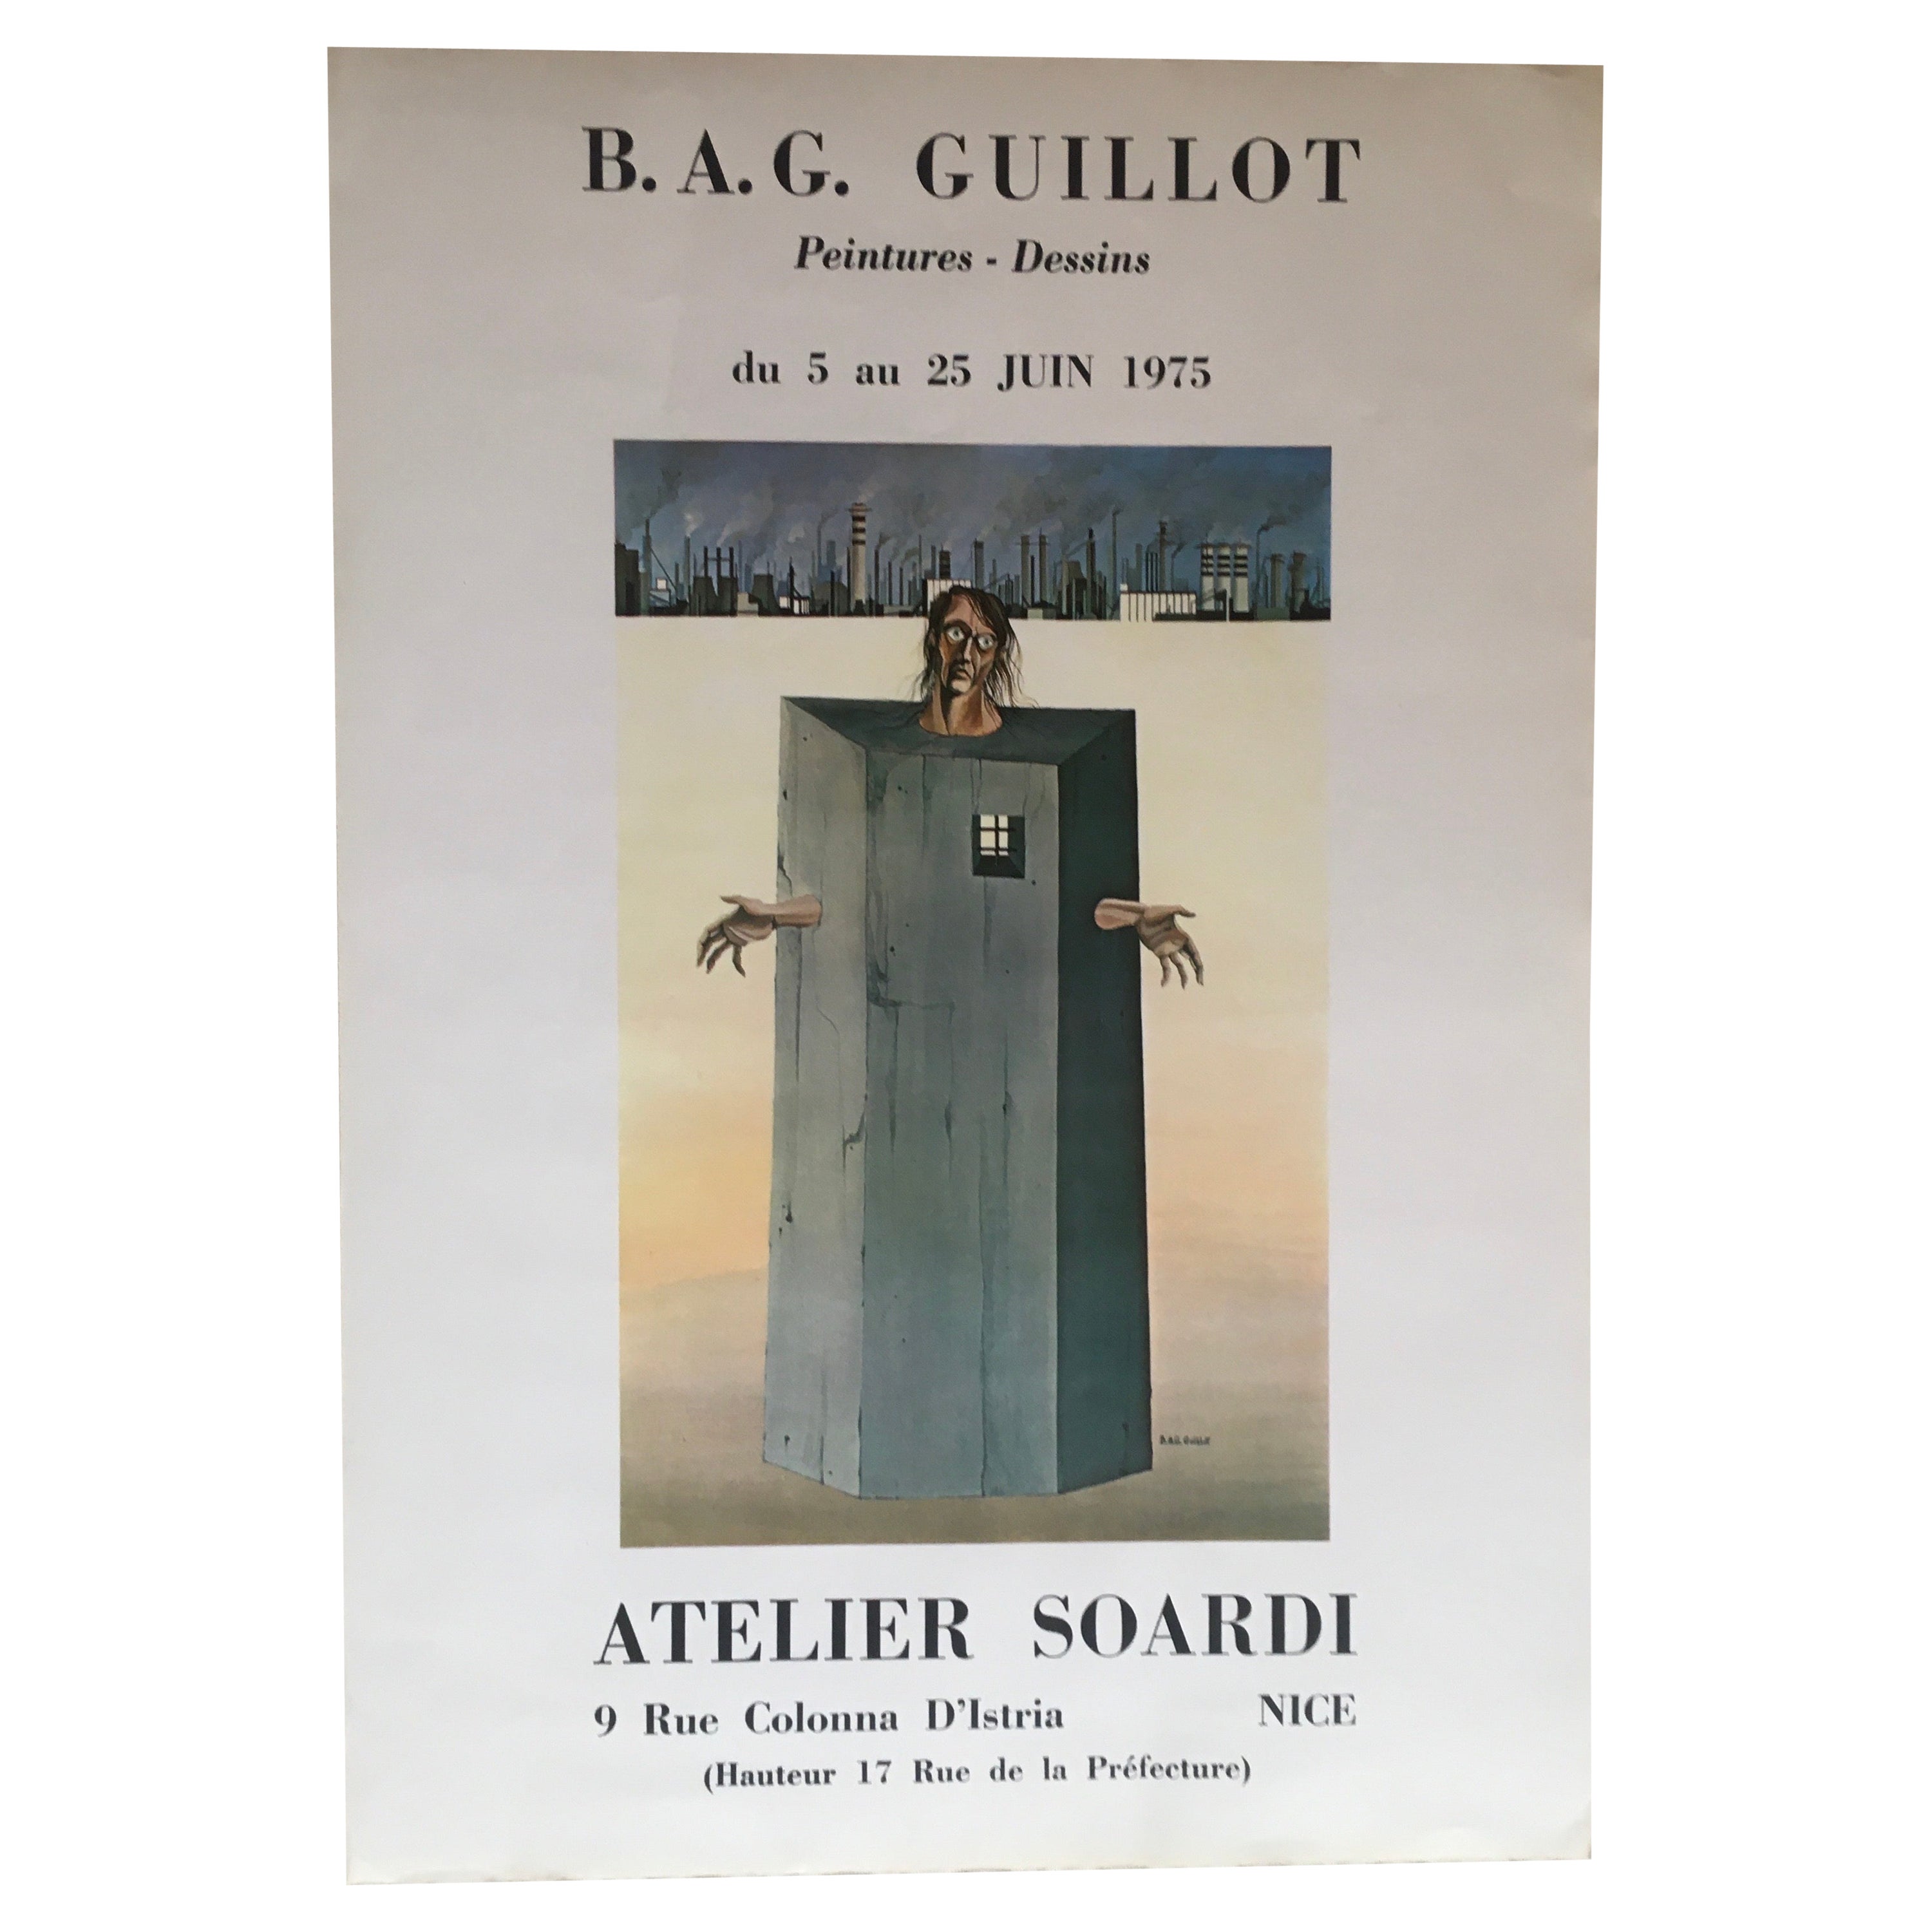 Original Midcentury Surrealist Art Exhibition Poster, B.A.G. Guillot